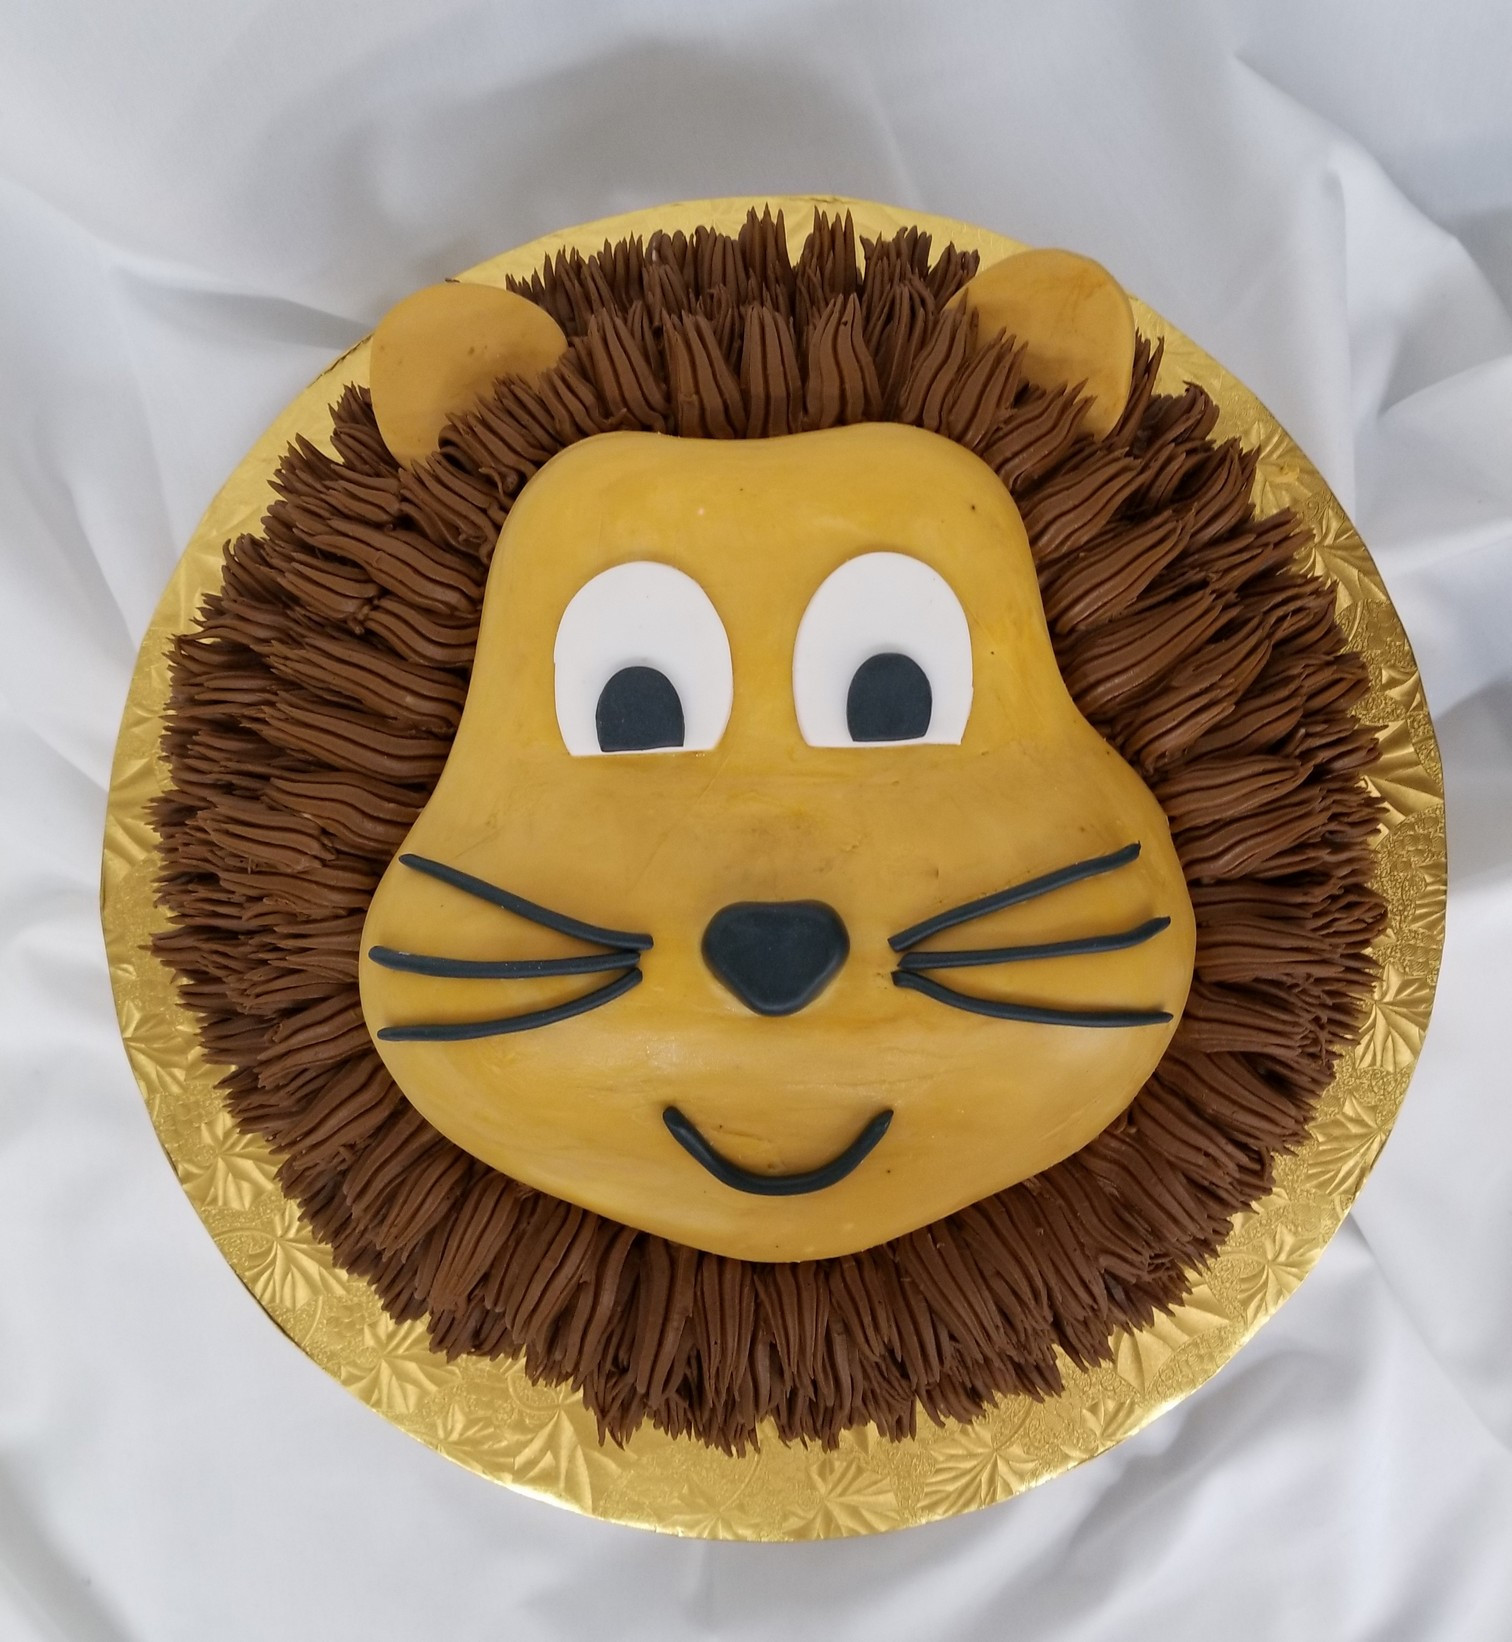 Lion Birthday Cake
 Lion s Head celebration cake from Cinotti s Bakery